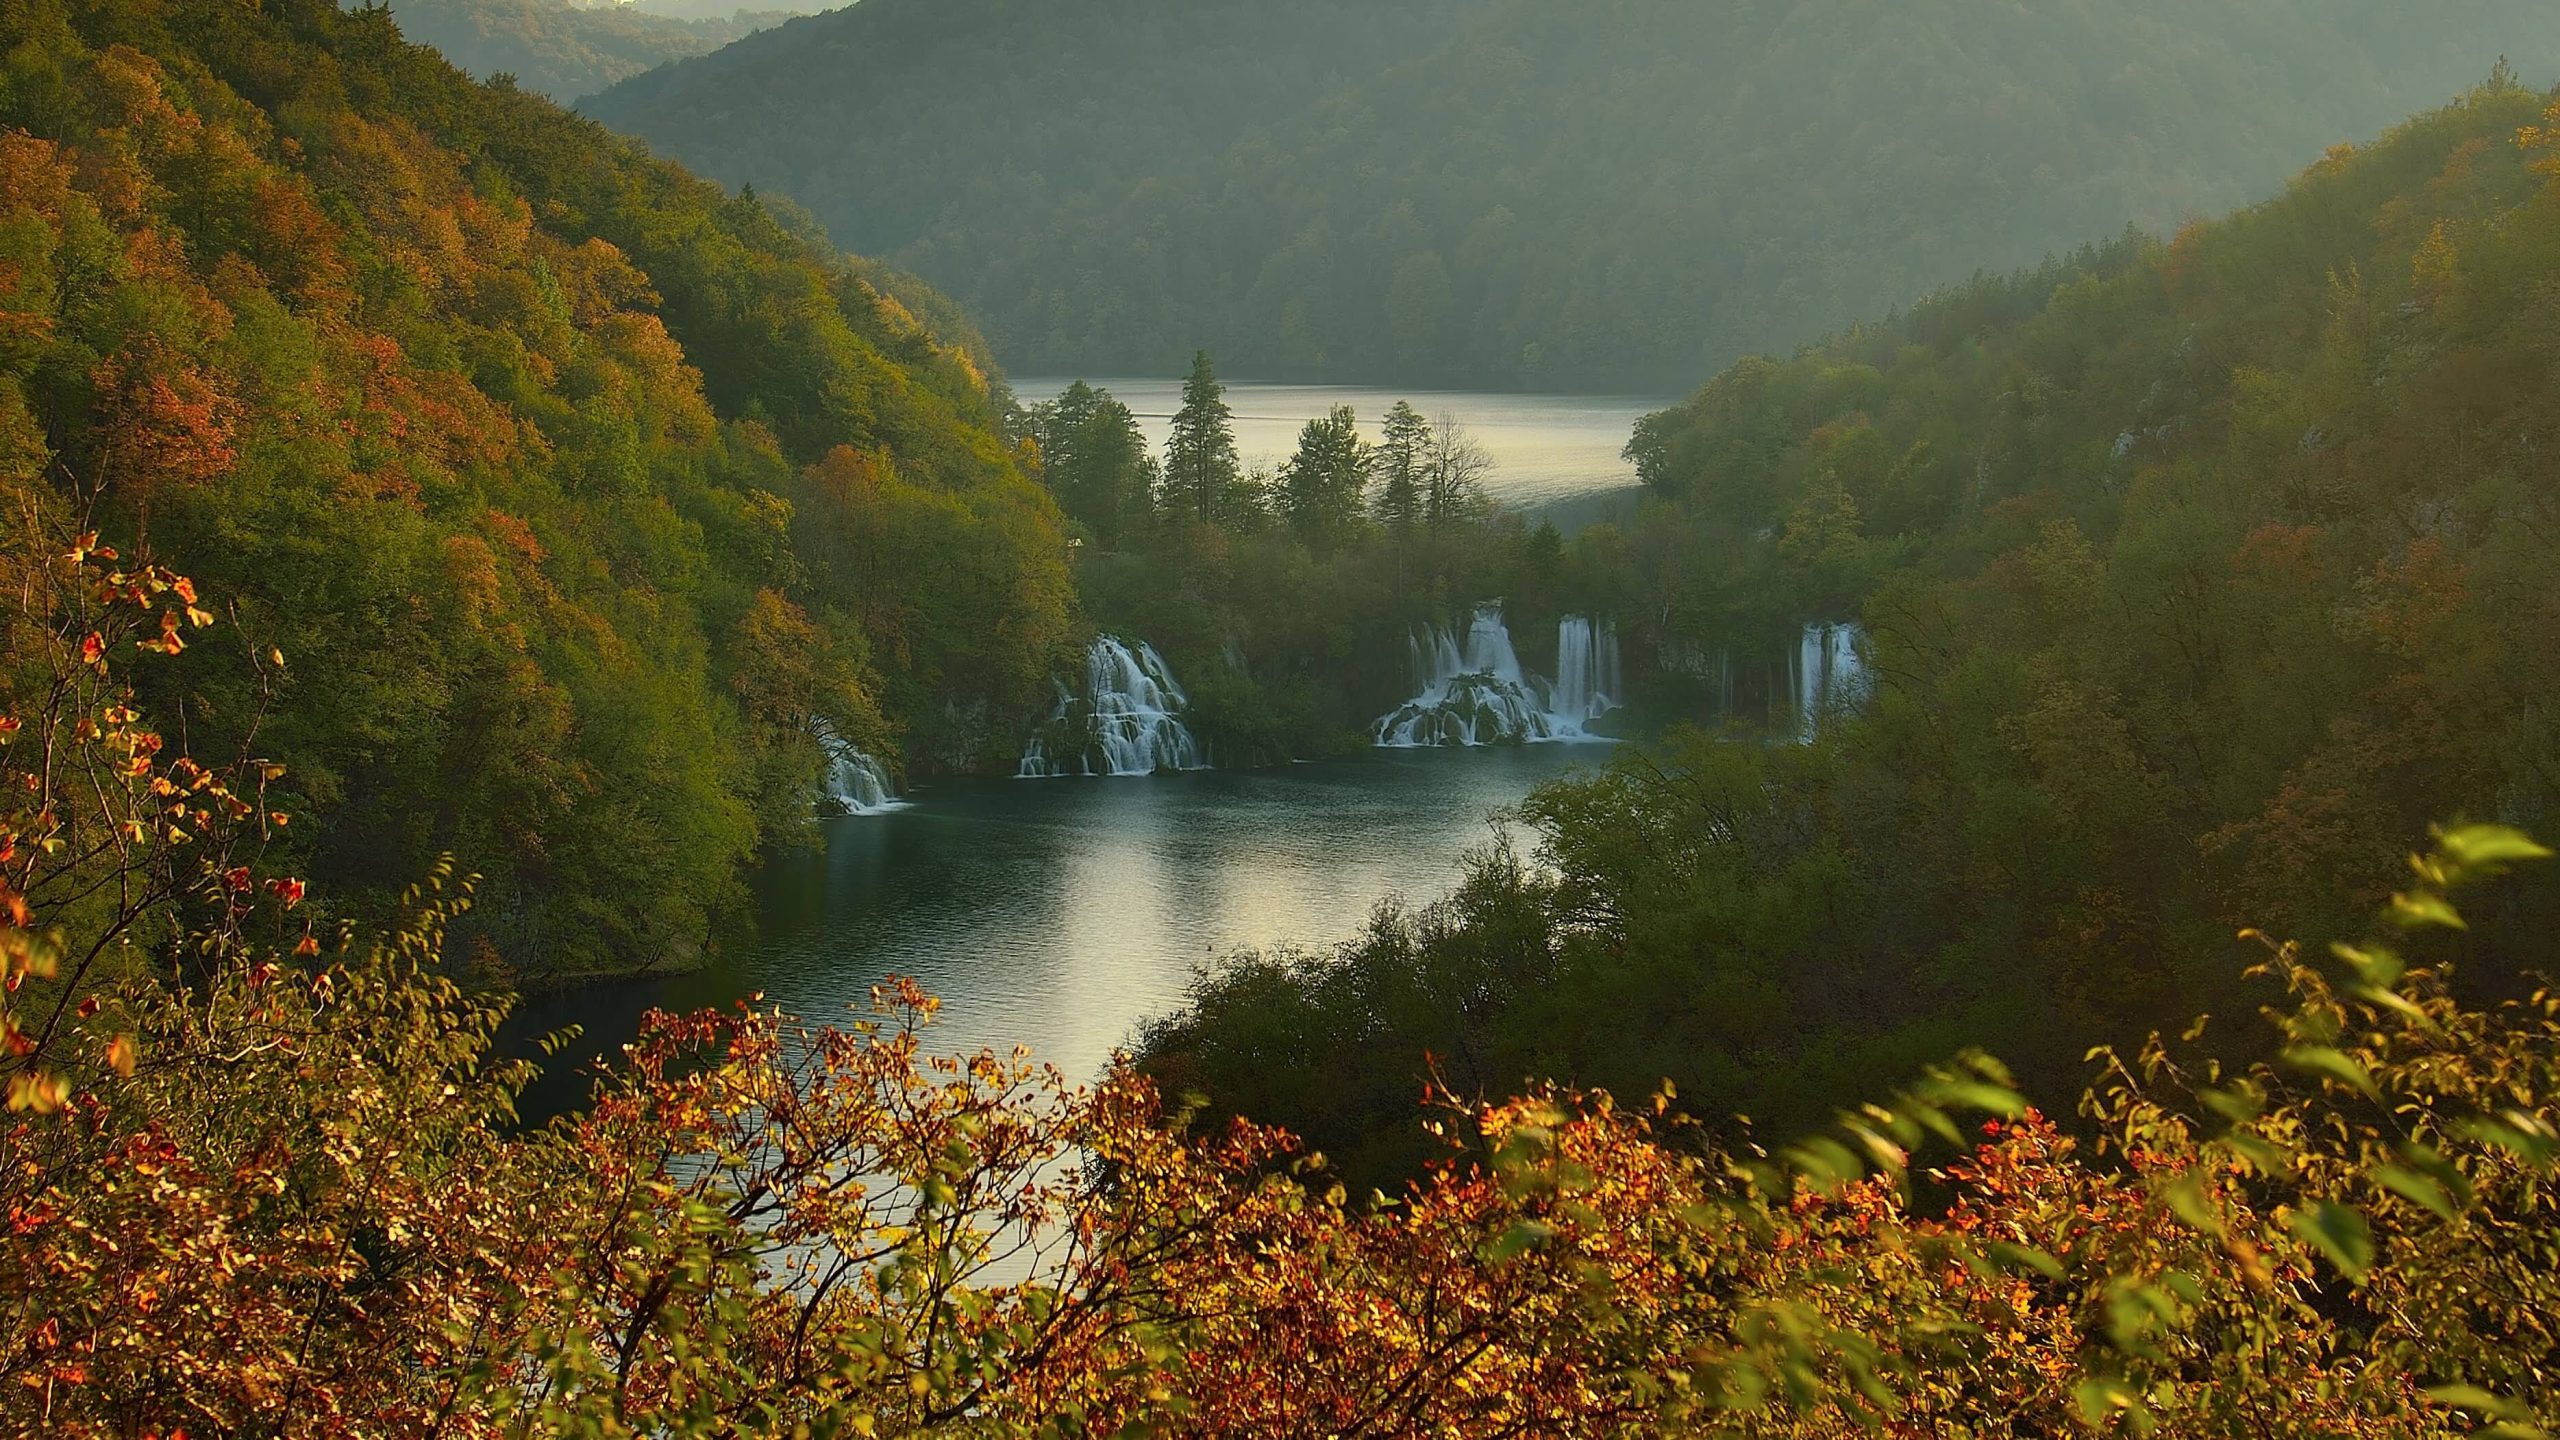 Credits: Plitvice Lakes National Park